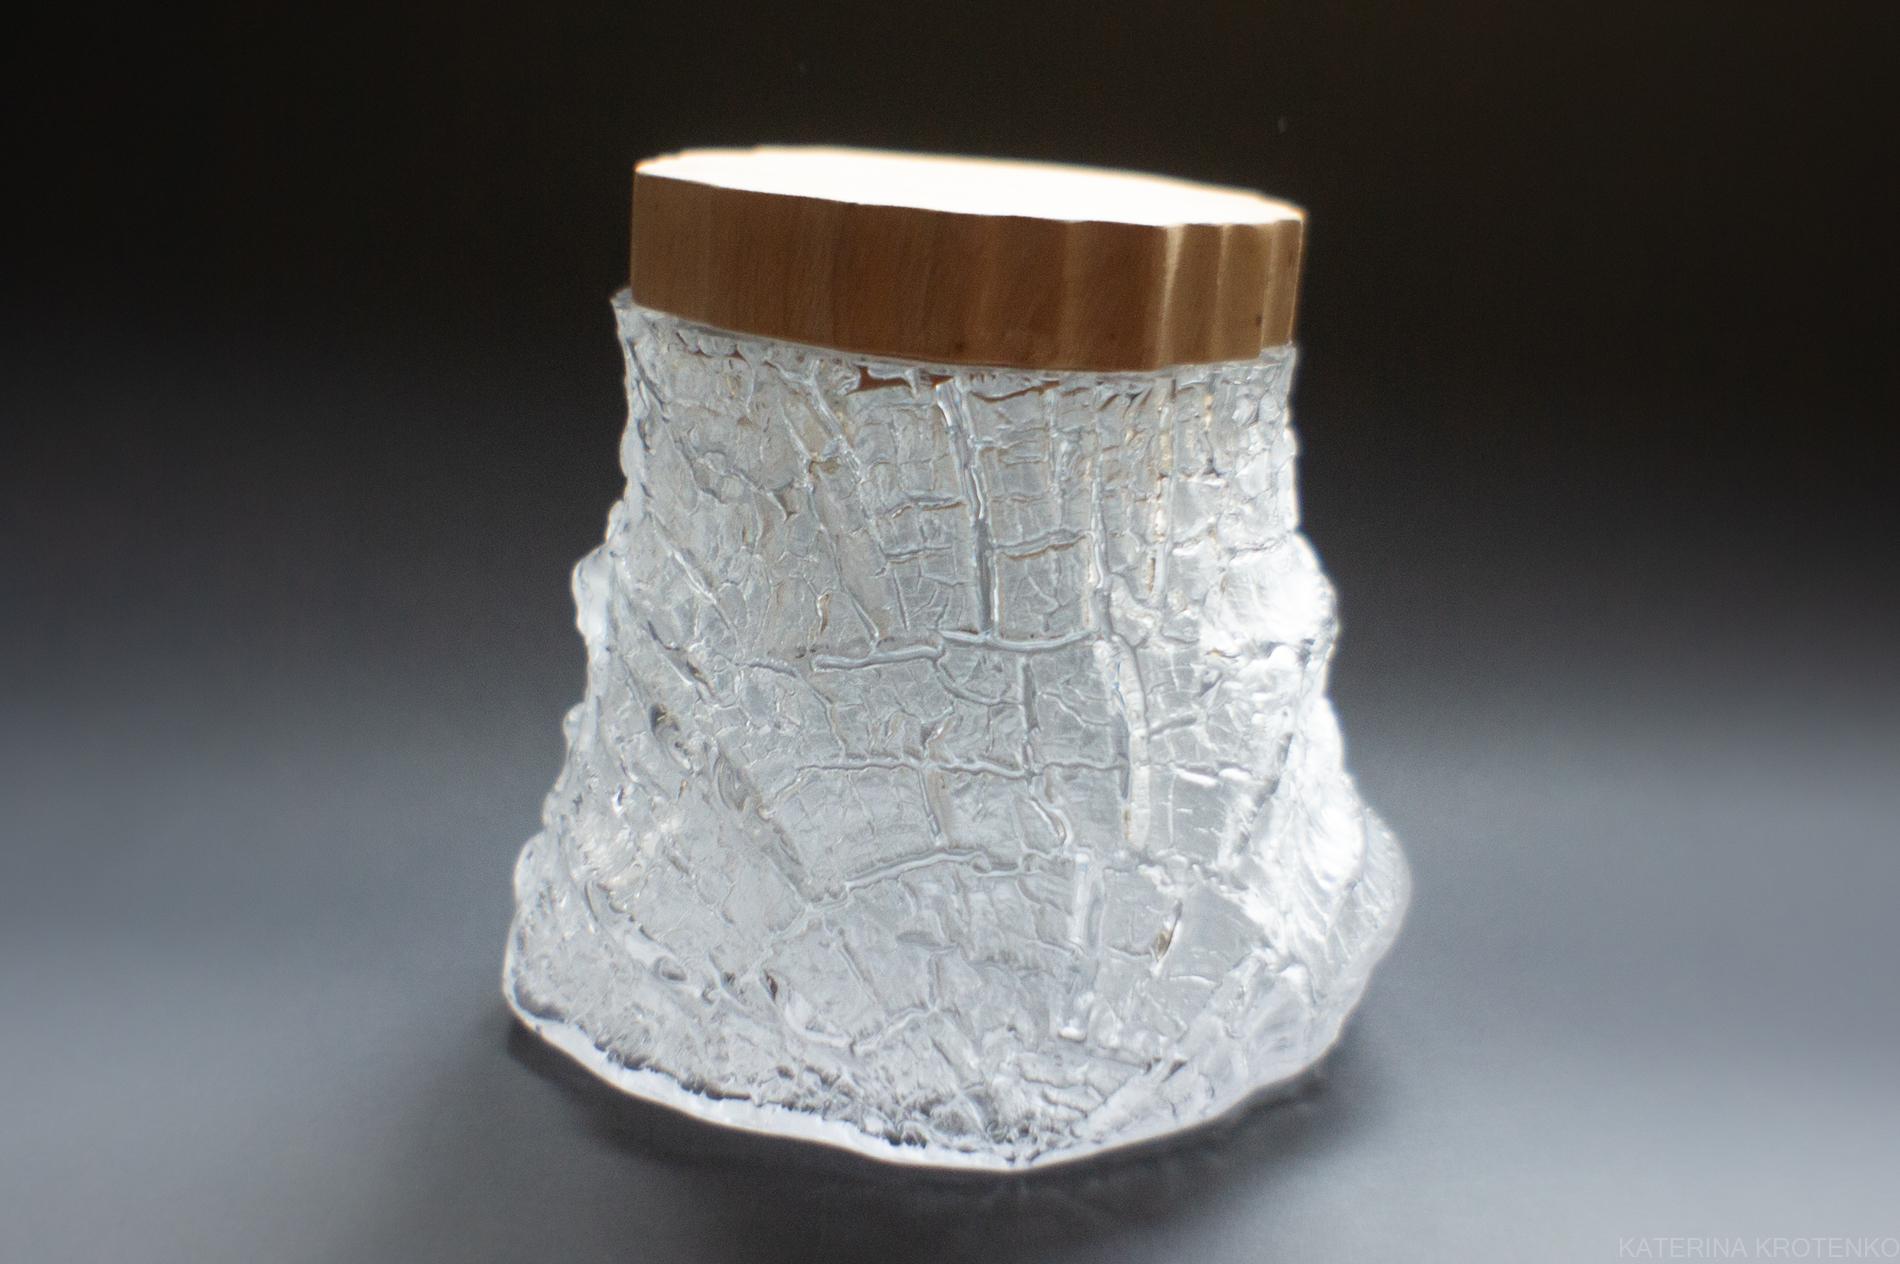 Drago glass treasury container object - Art by Katerina Krotenko